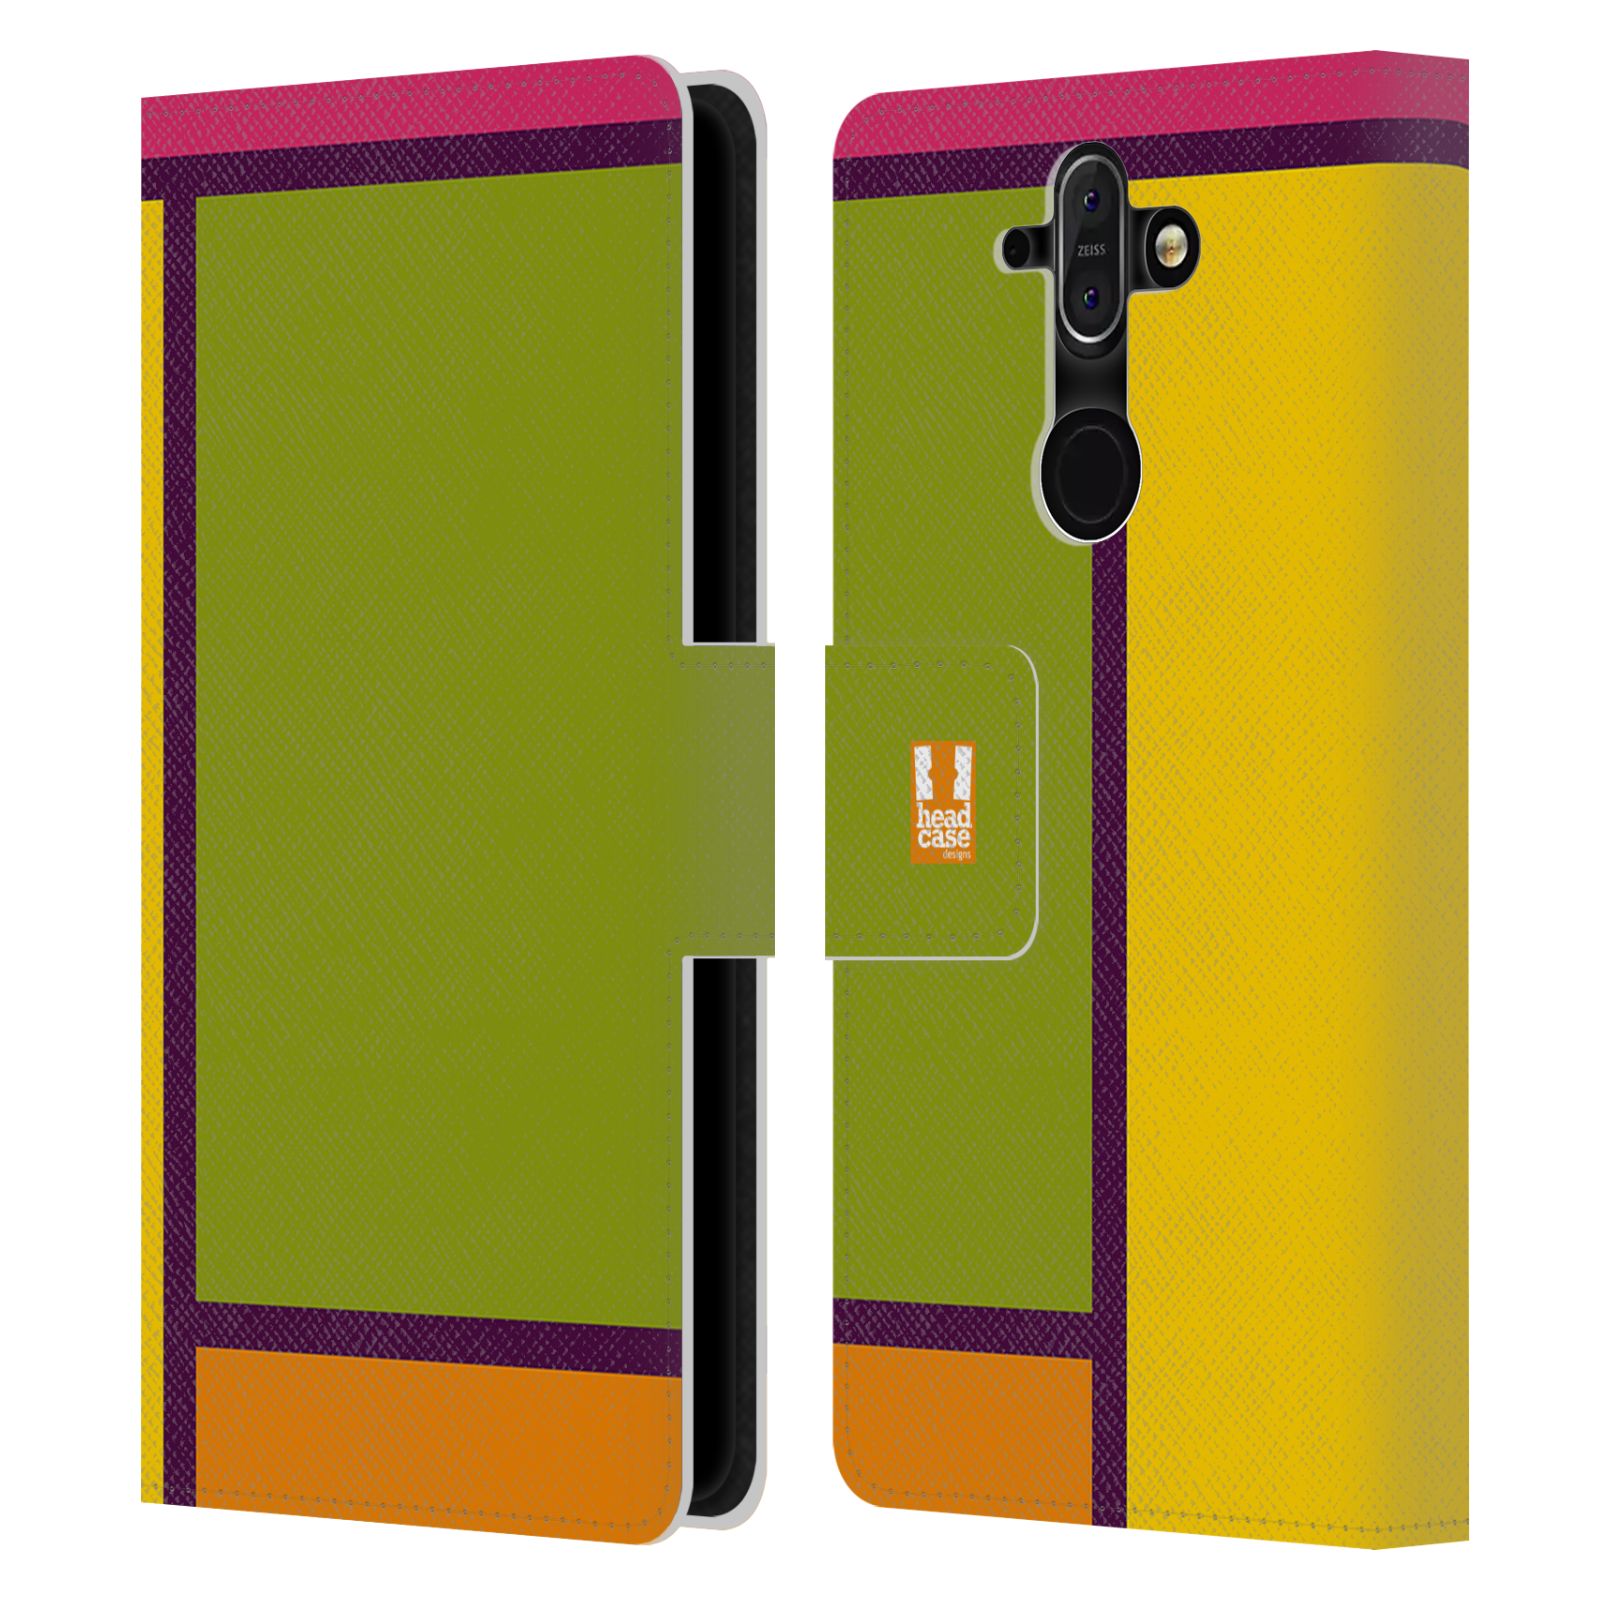 HEAD CASE Flipové pouzdro pro mobil Nokia 8 SIROCCO MODERN barevná kostka zelená a žlutá